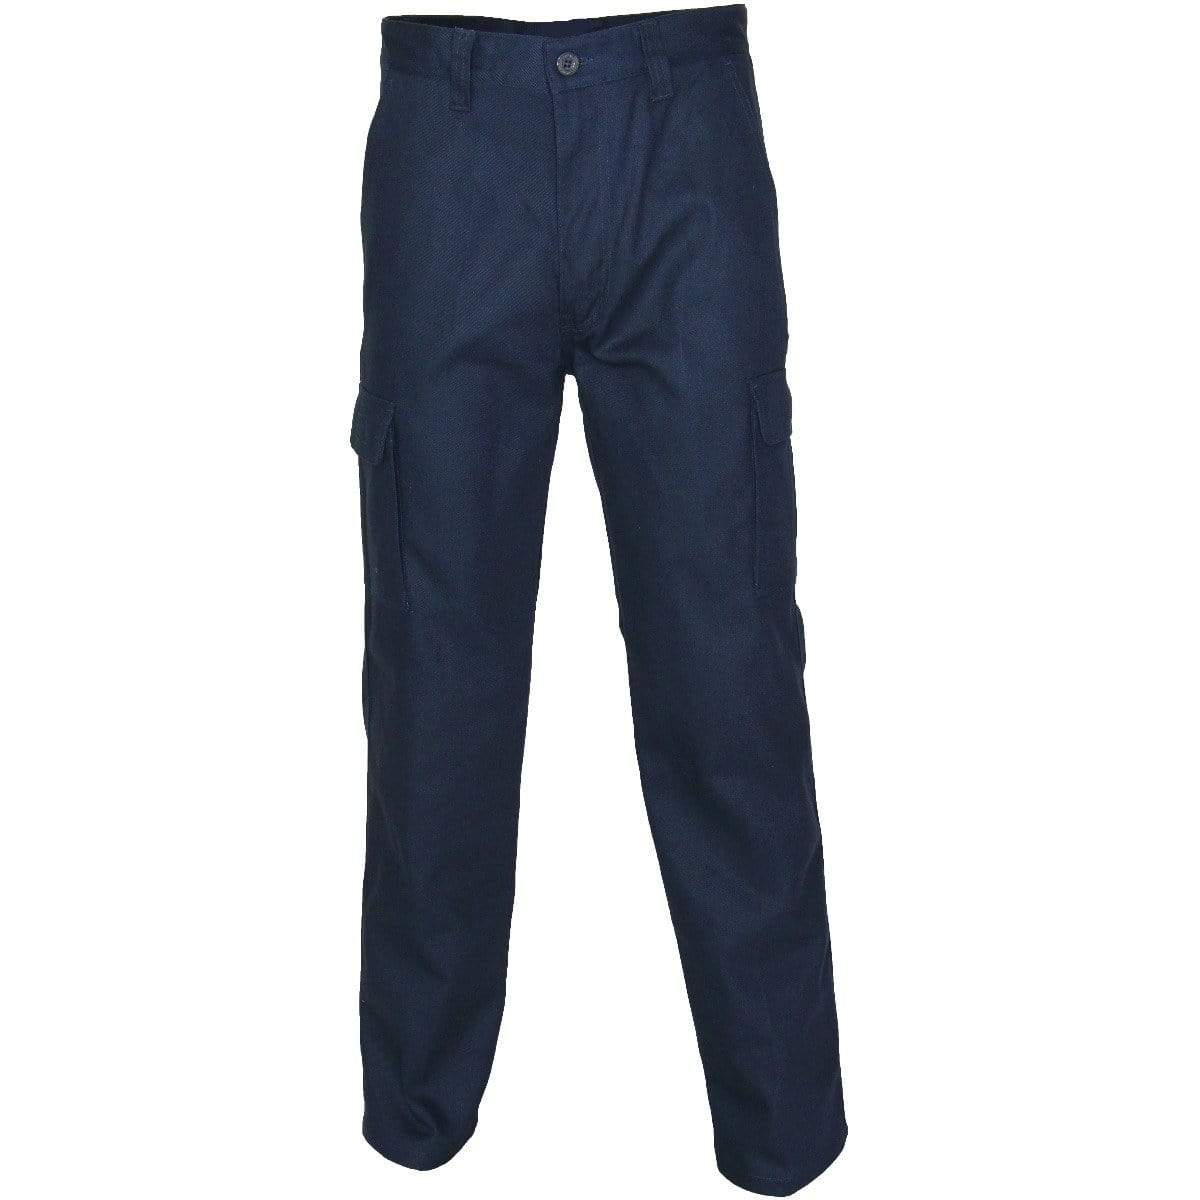 Dnc Workwear Patron Saint Flame Retardant Arc Rated Cargo Pants - 3412 Work Wear DNC Workwear Navy 107R 